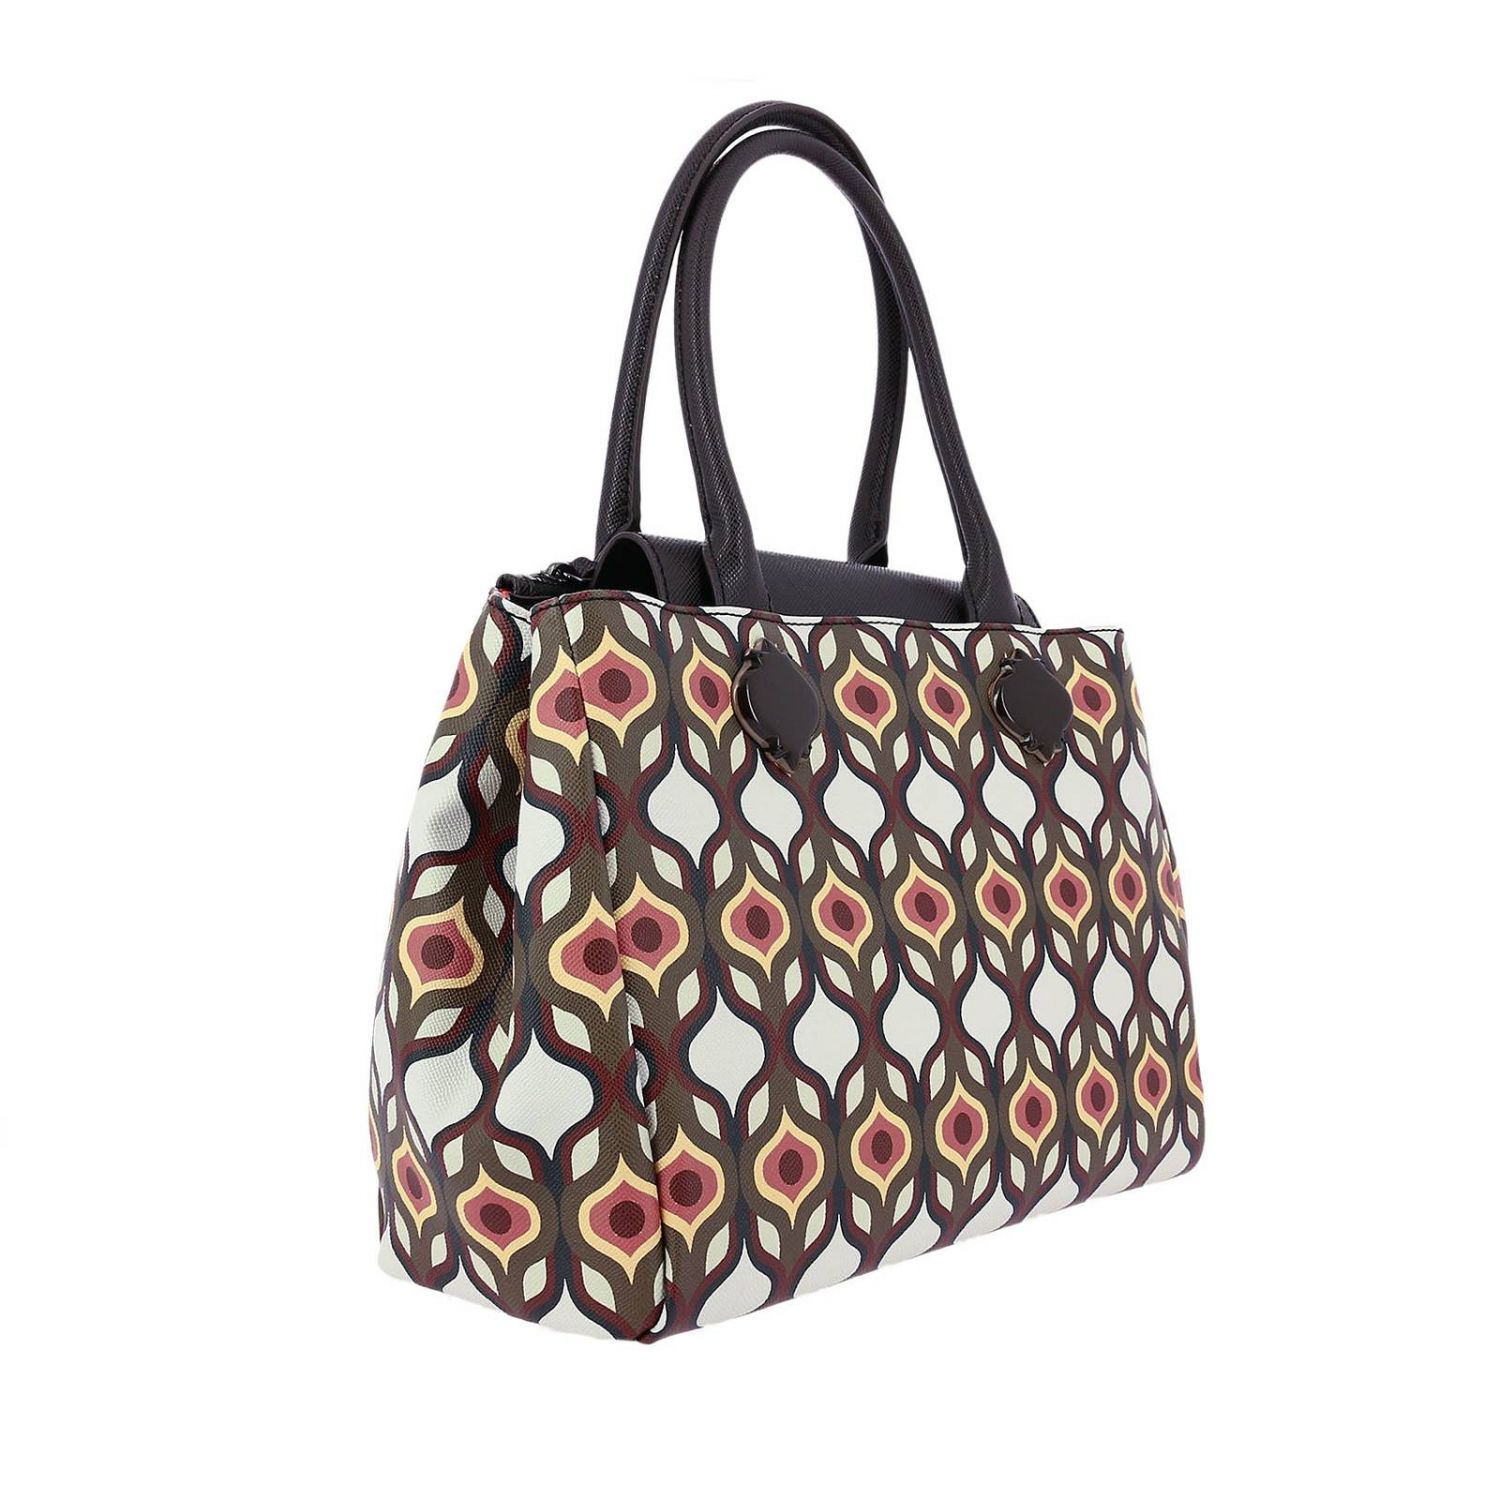 Maliparmi Outlet: Shoulder bag women | Shoulder Bag Maliparmi Women ...